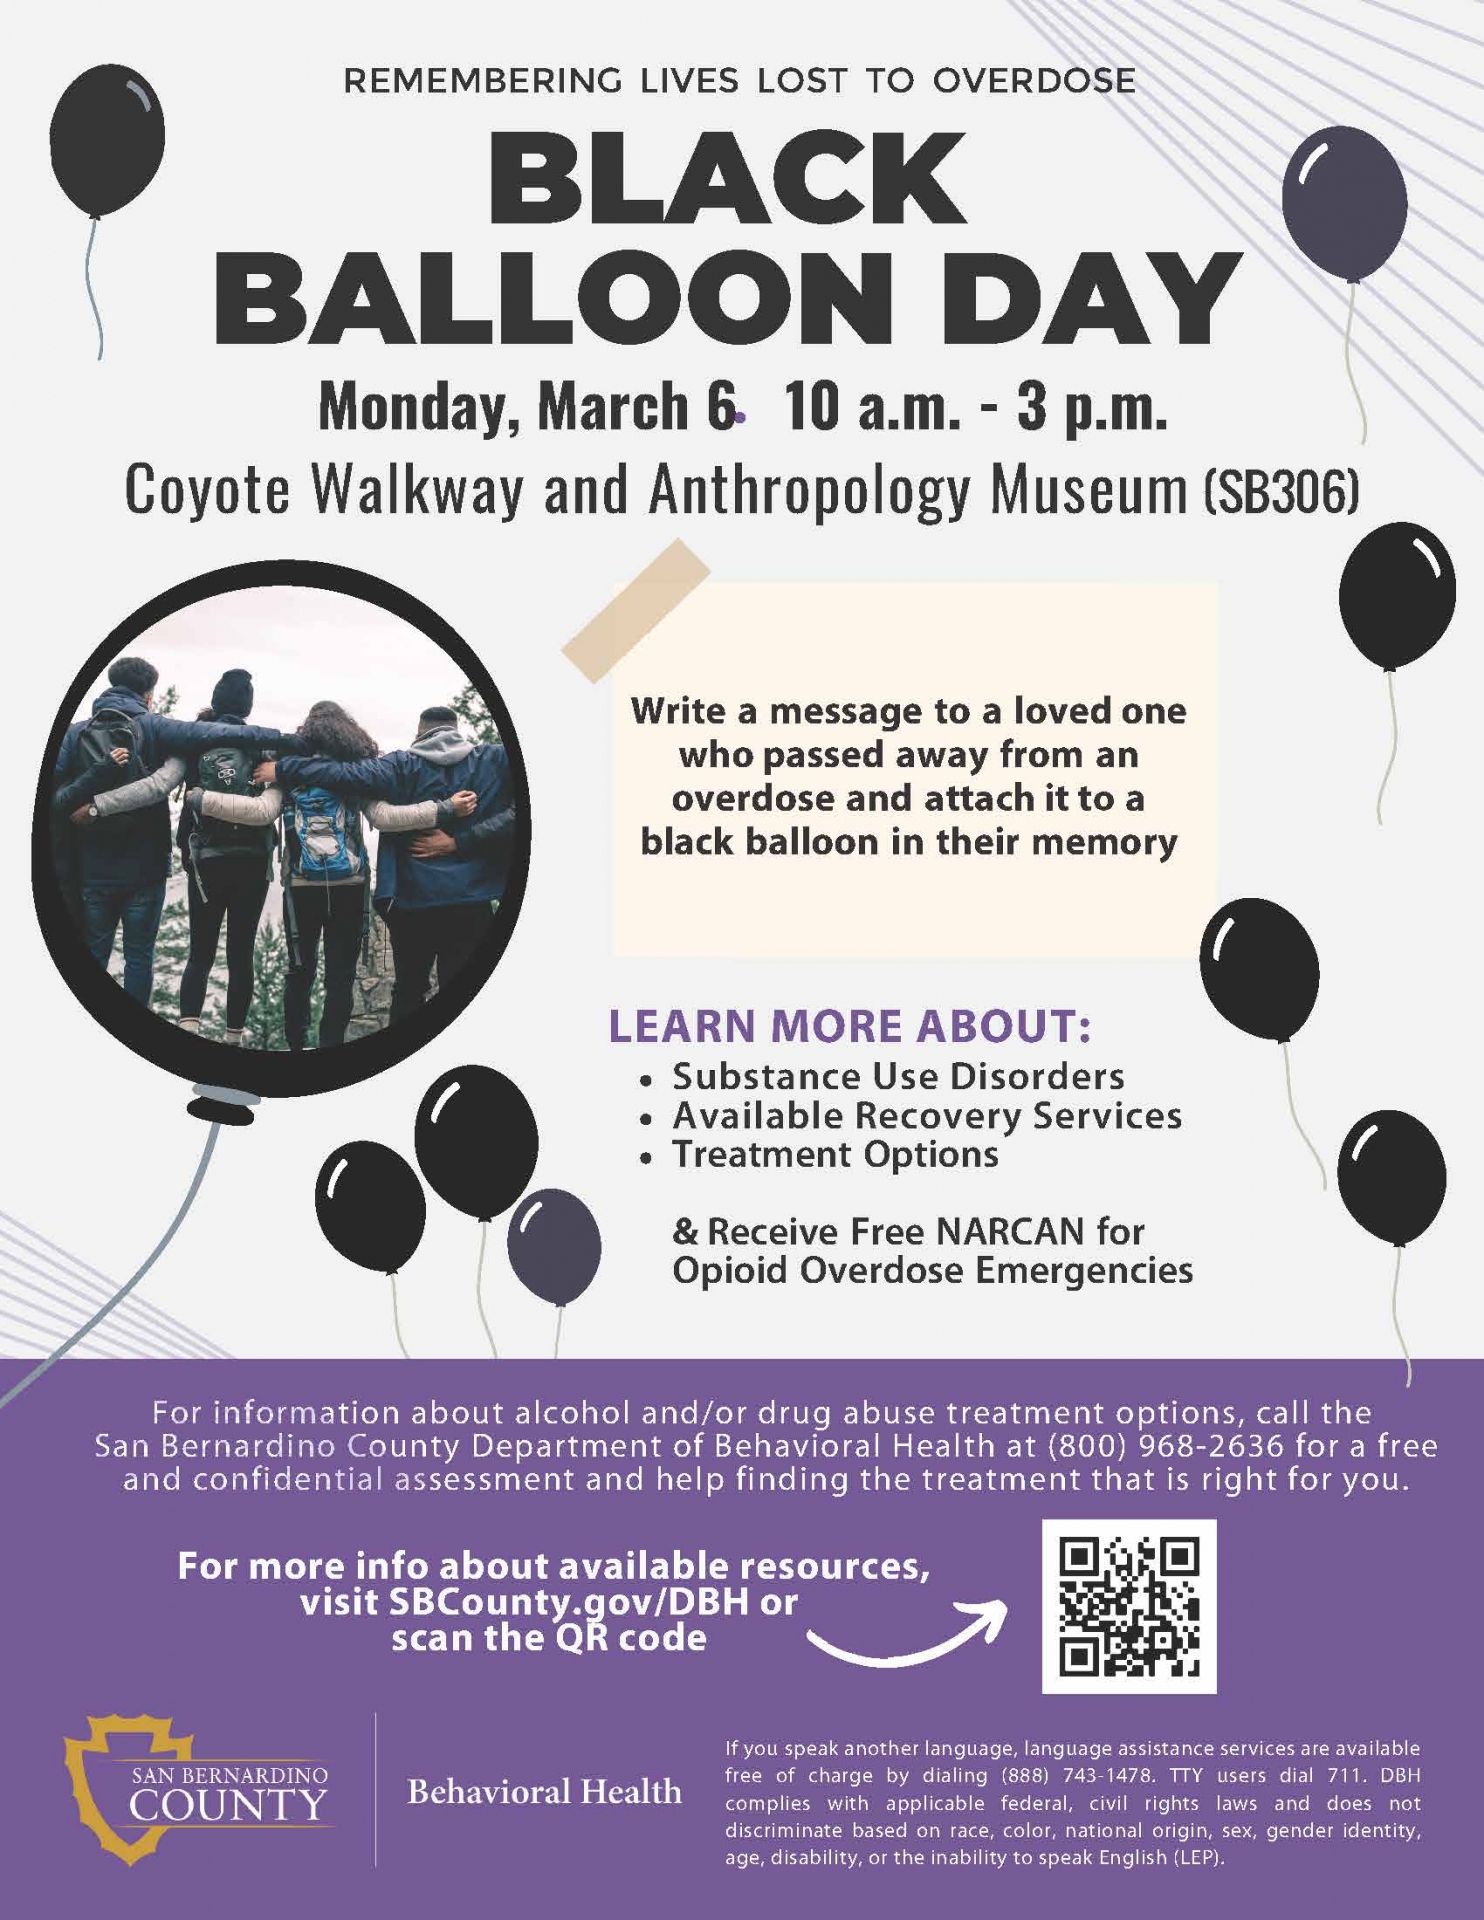 Black Balloon Day event flyer